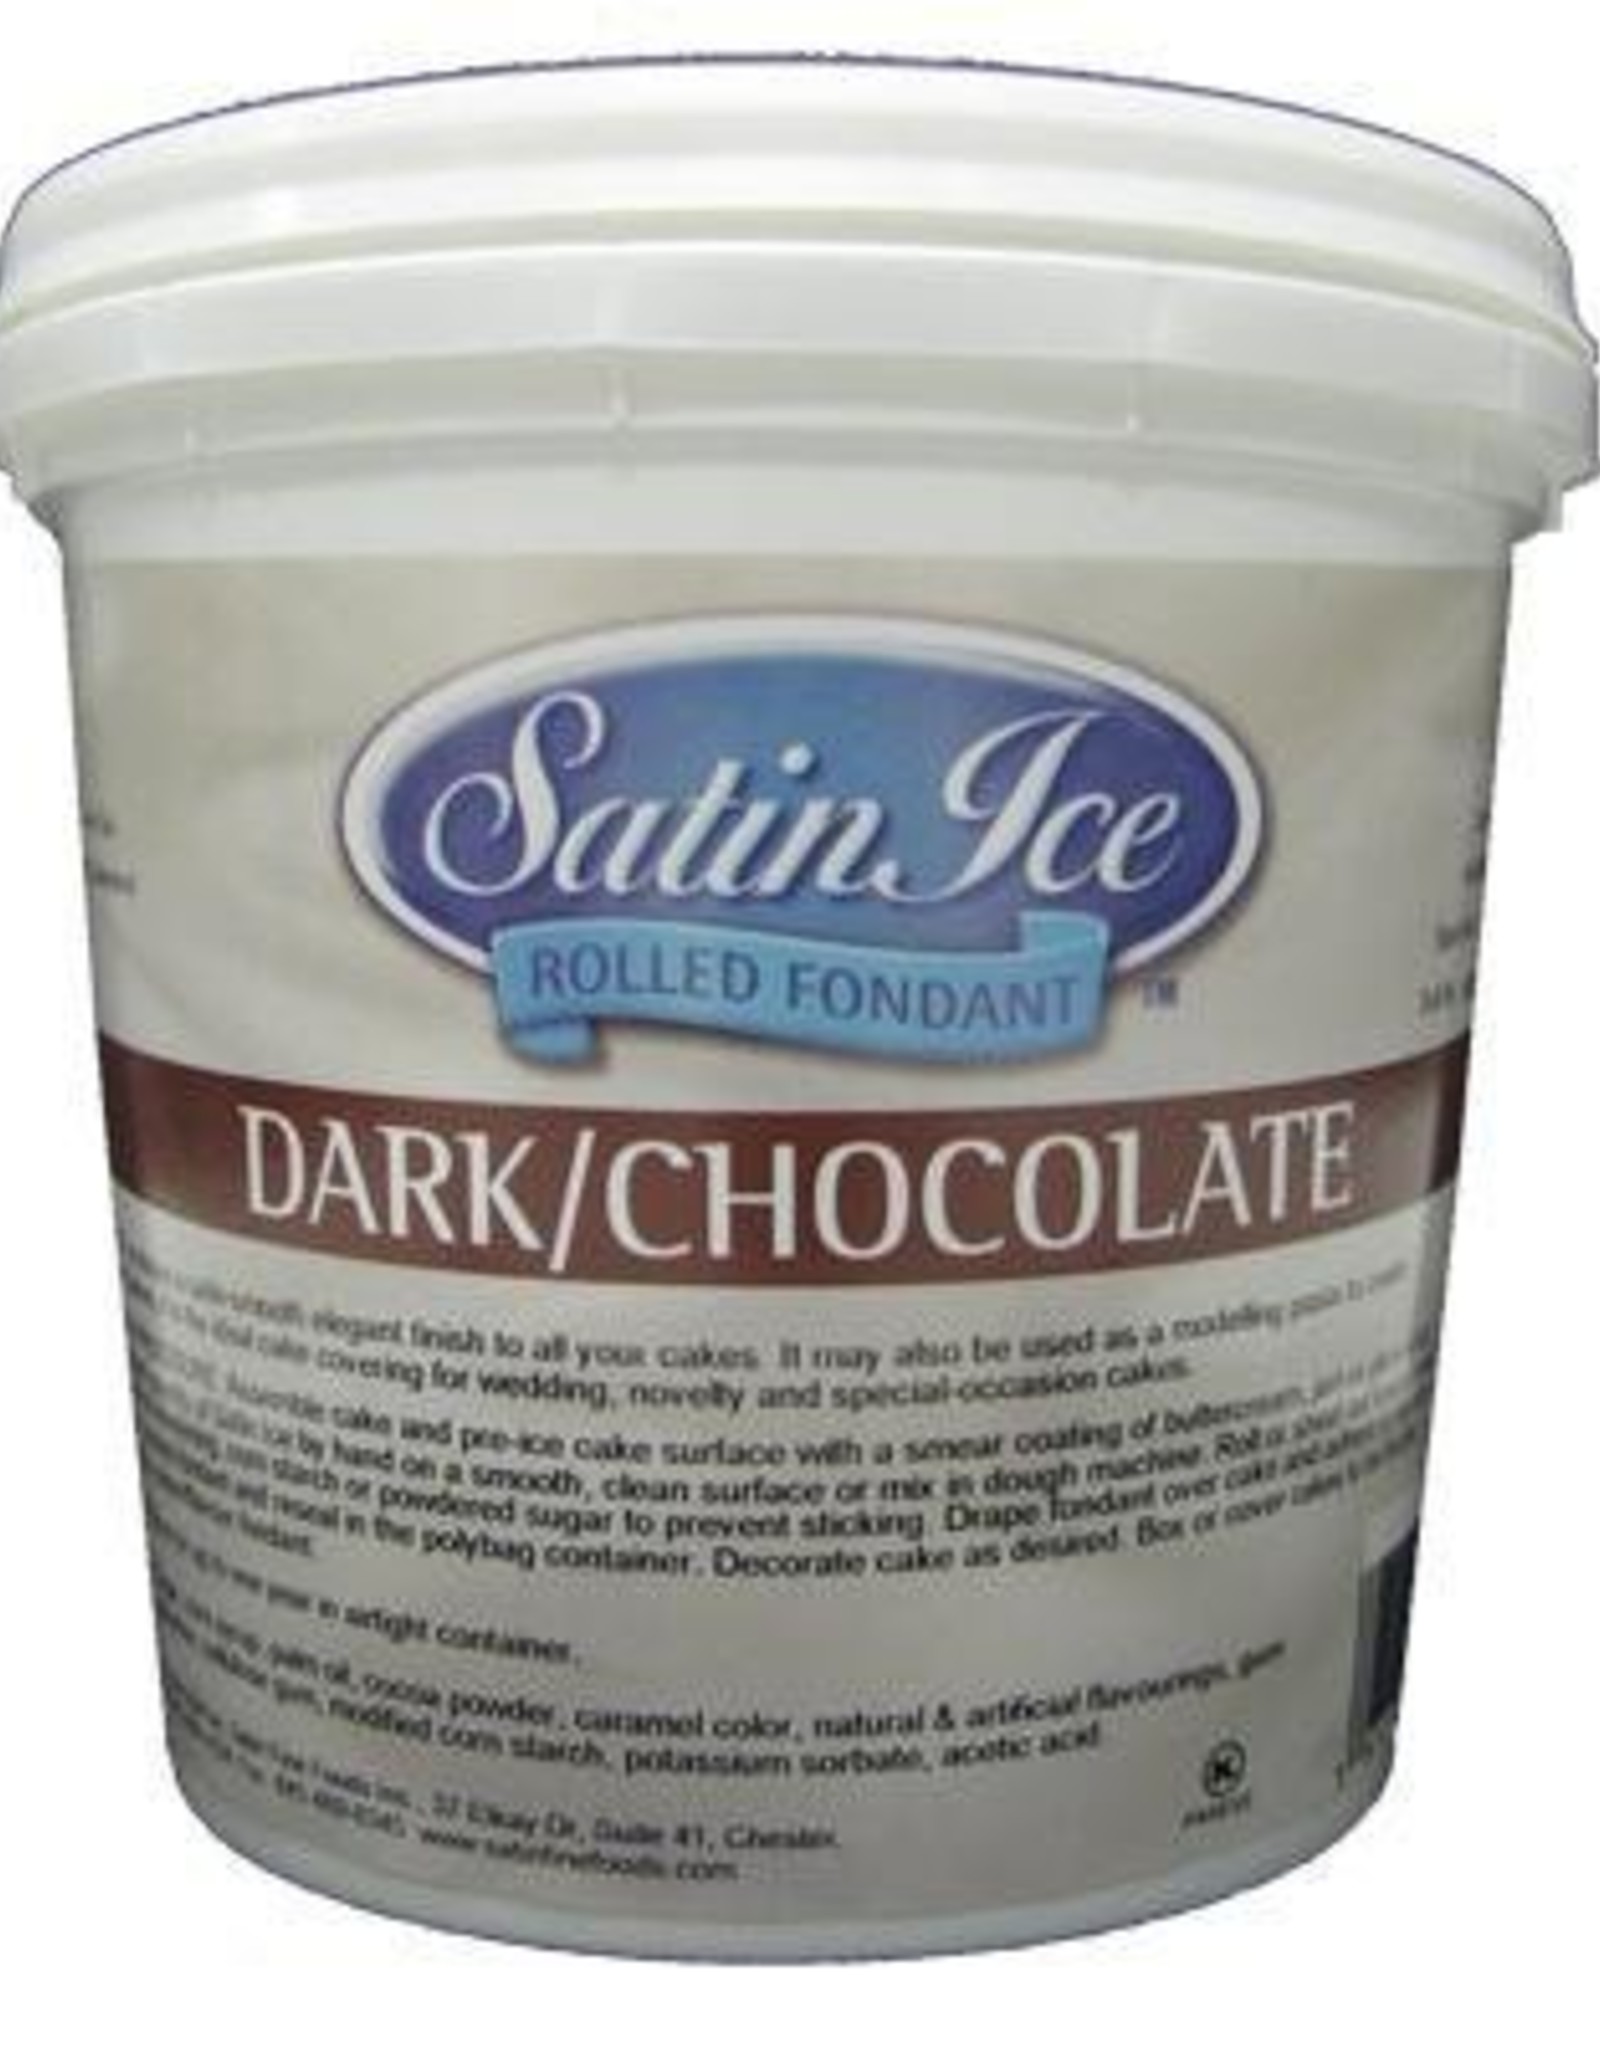 Satin Ice Fondant (Dark/Chocolate) 2 lb.